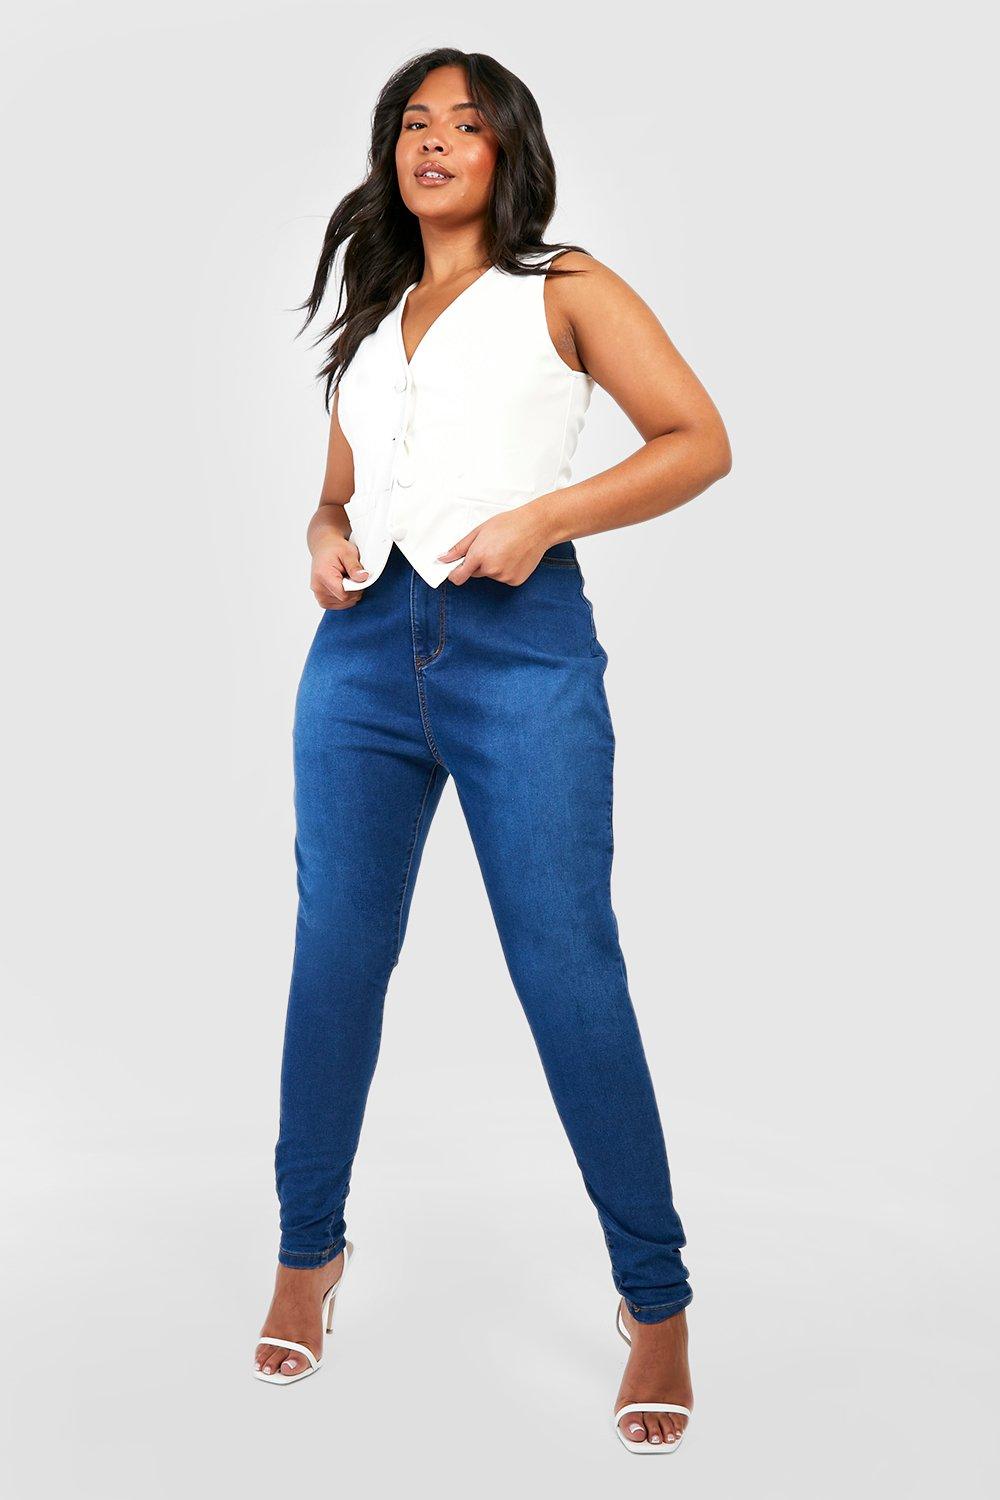 tempo sagde søskende Women's Plus Butt Shaper High Stretch Skinny Jeans | Boohoo UK